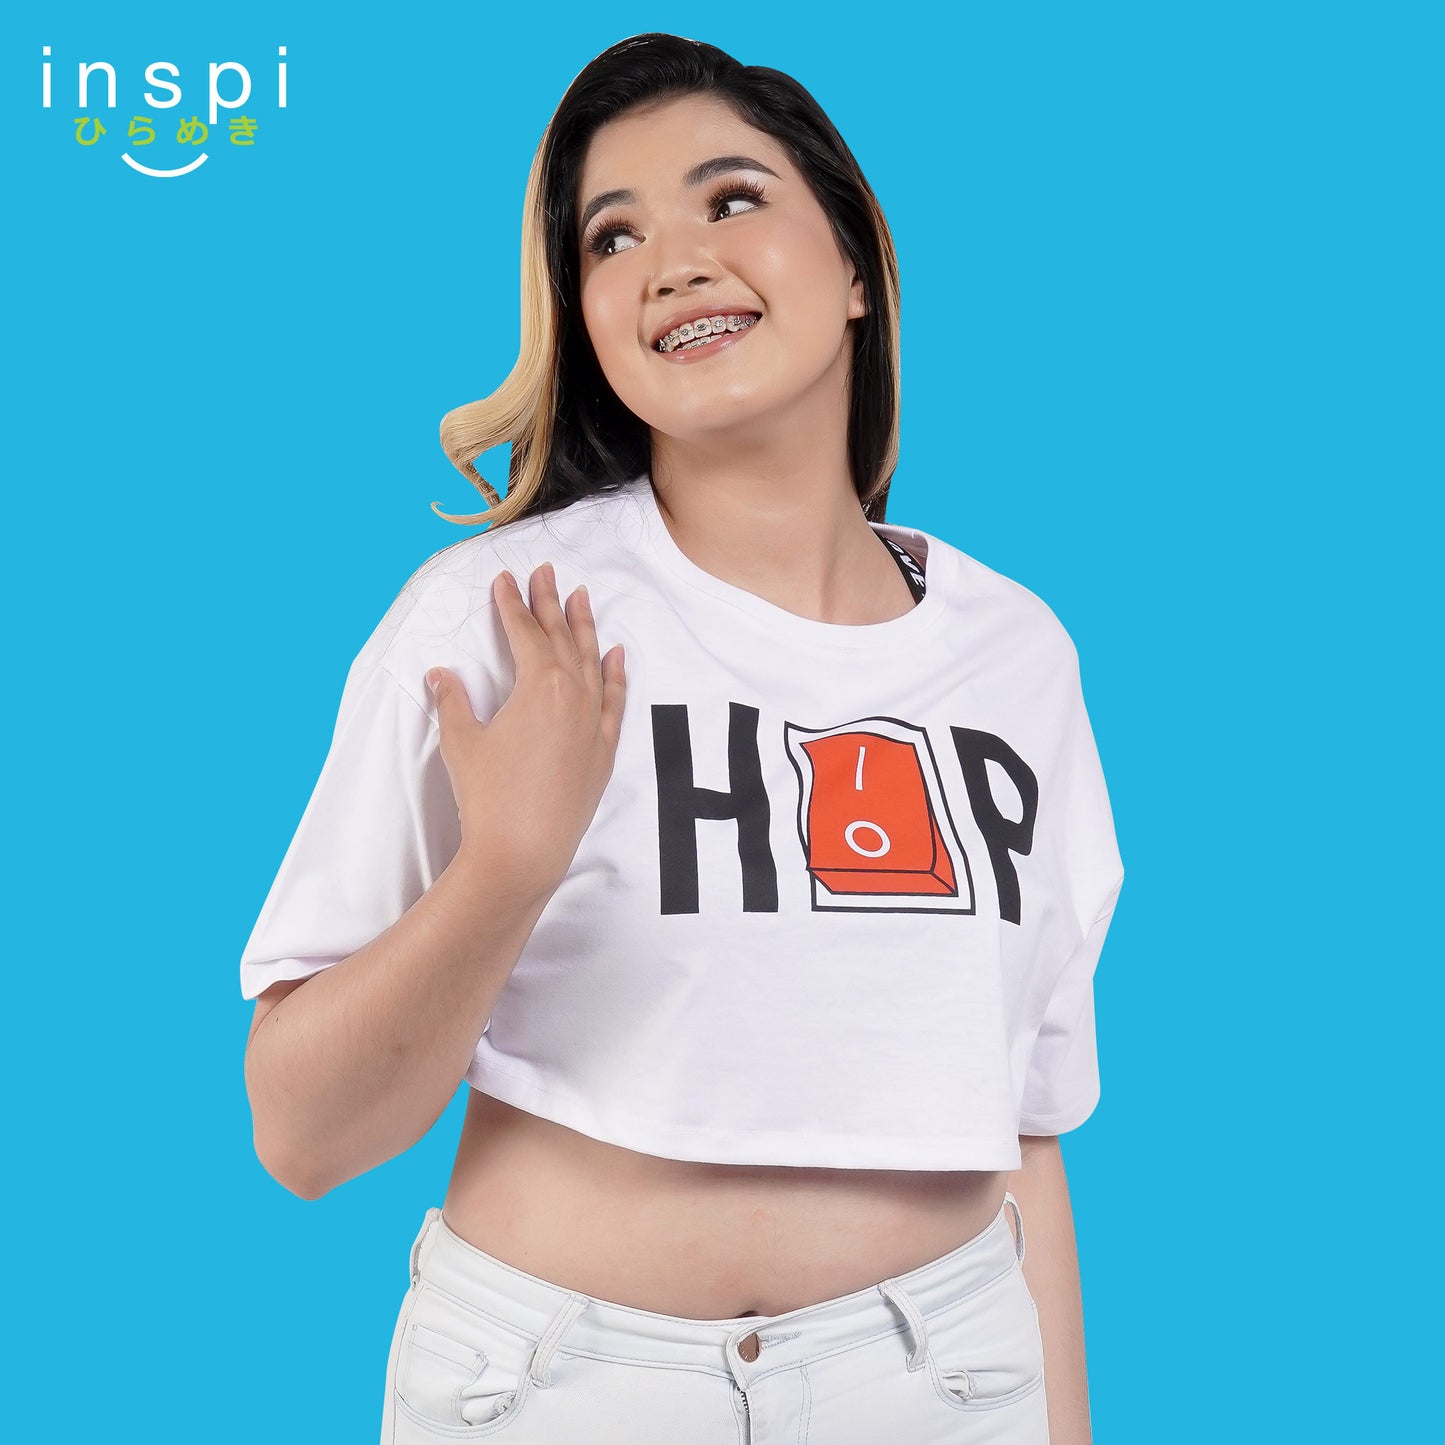 INSPI Oversized Crop Top Hip Hop Graphic Tshirt